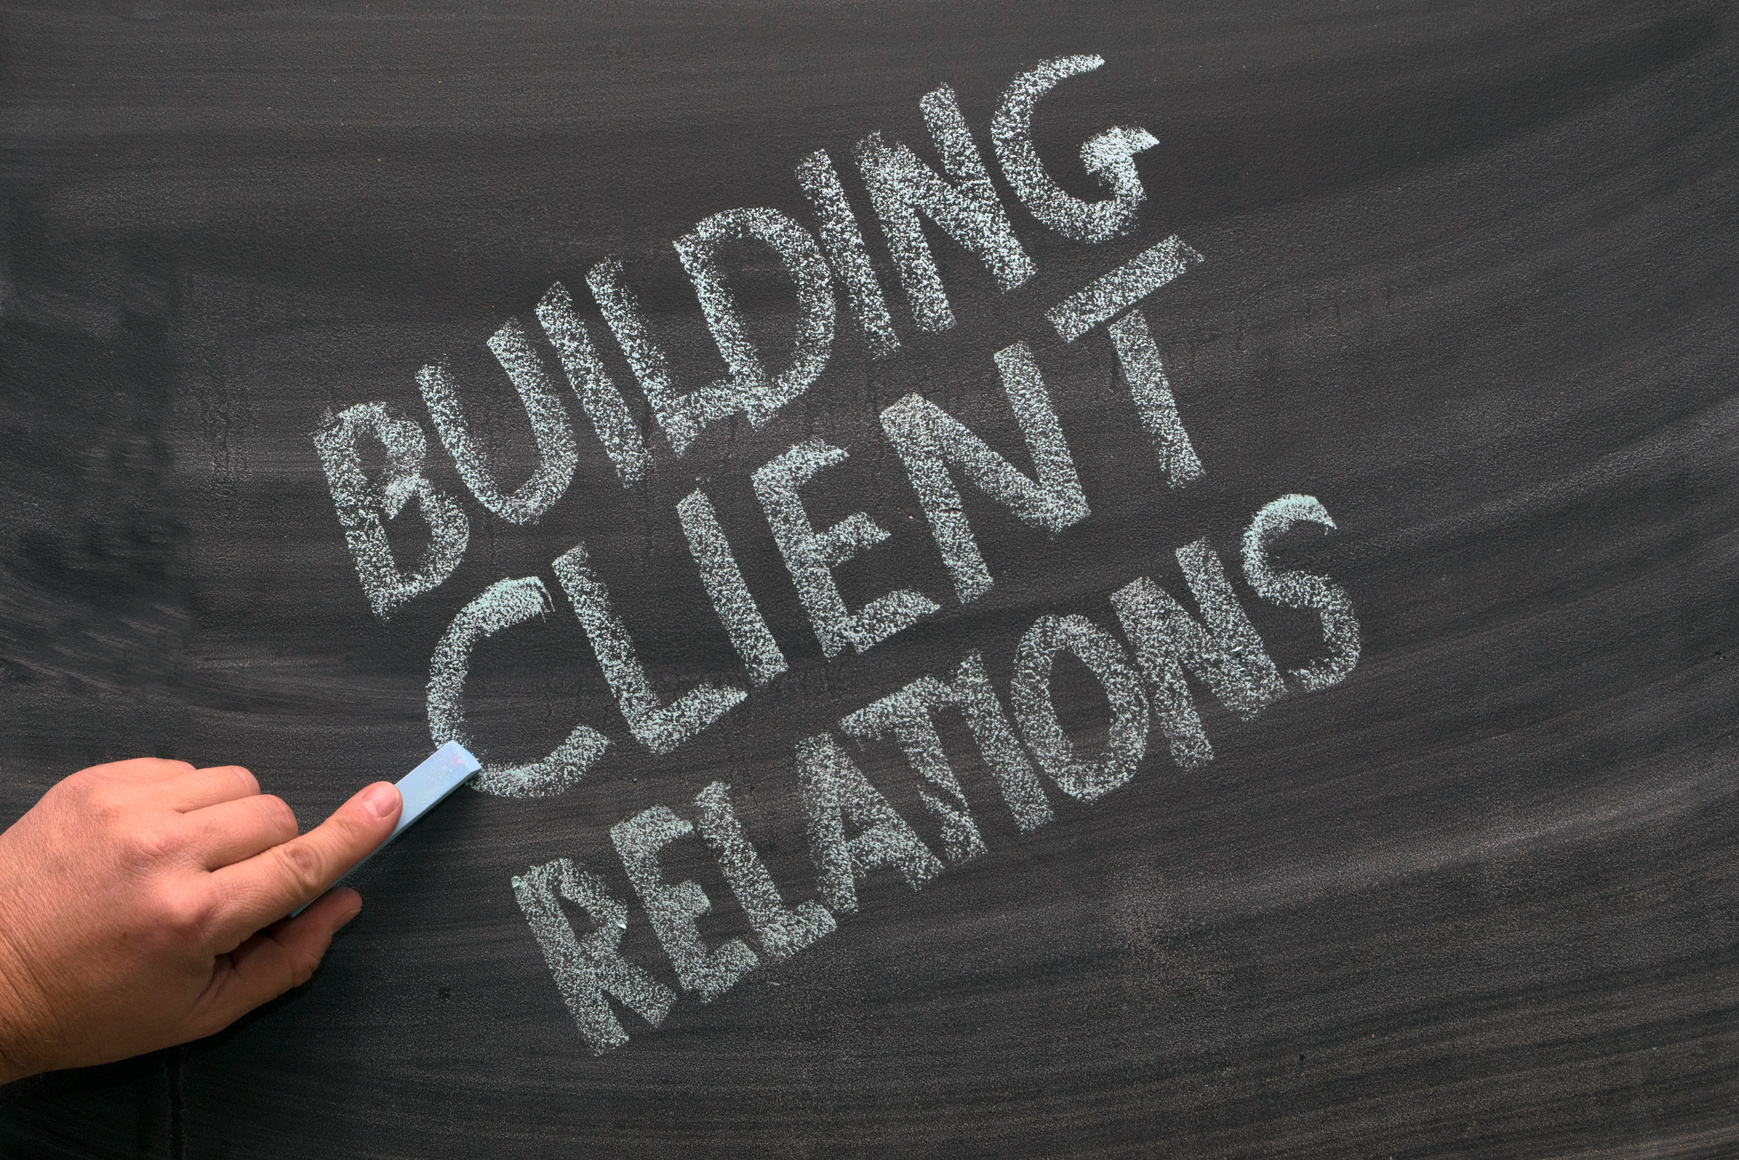 Building client relations